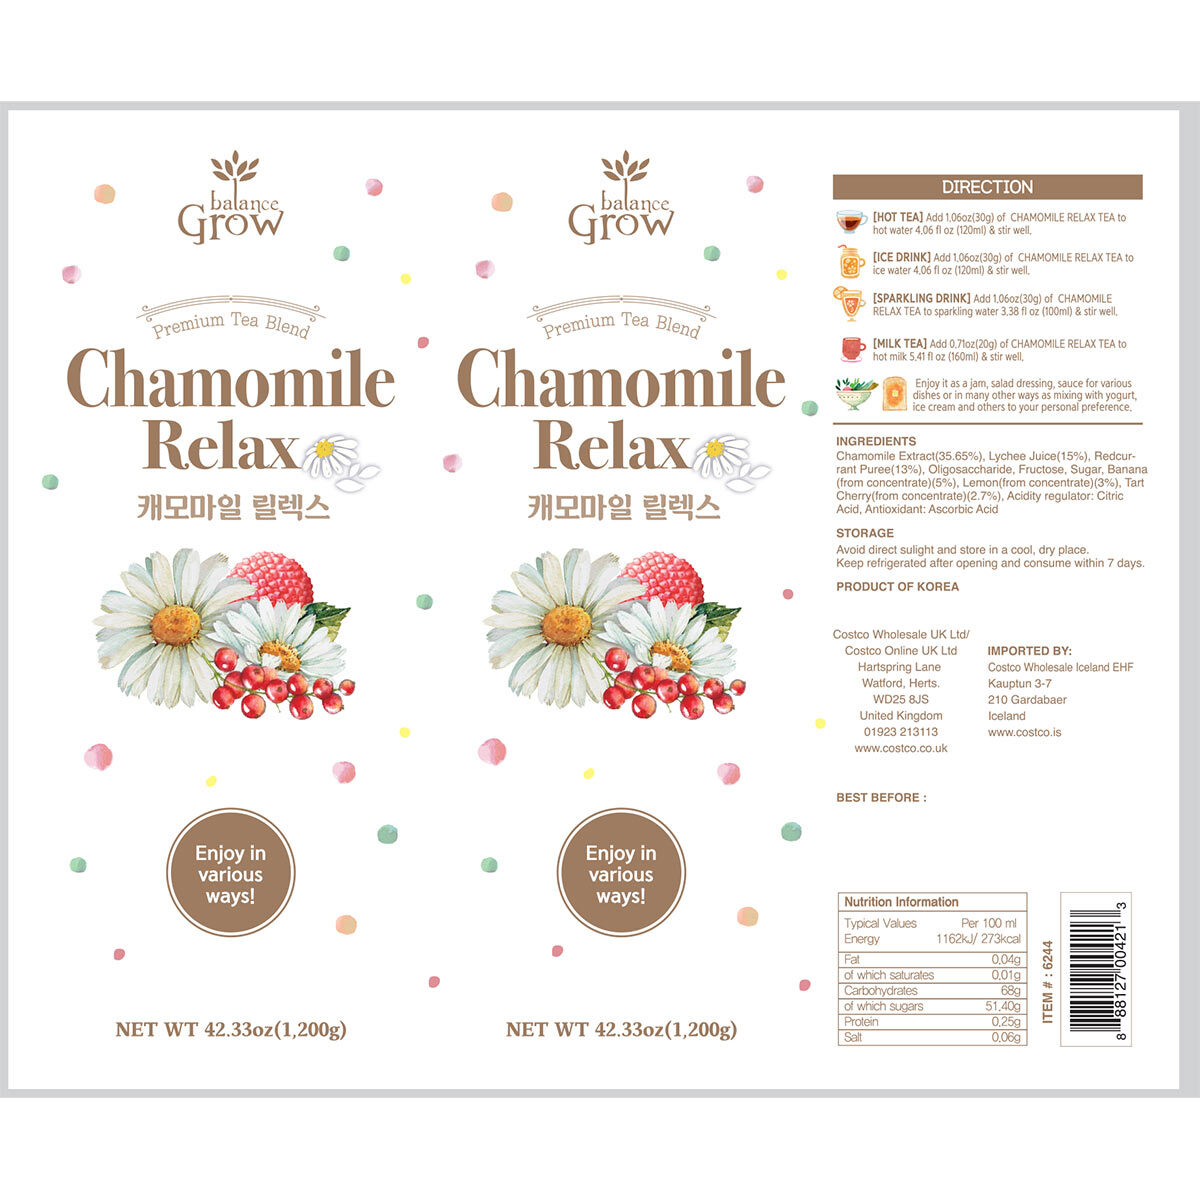 Balance Grow Chamomile Relax Premium Tea Blend, 1L